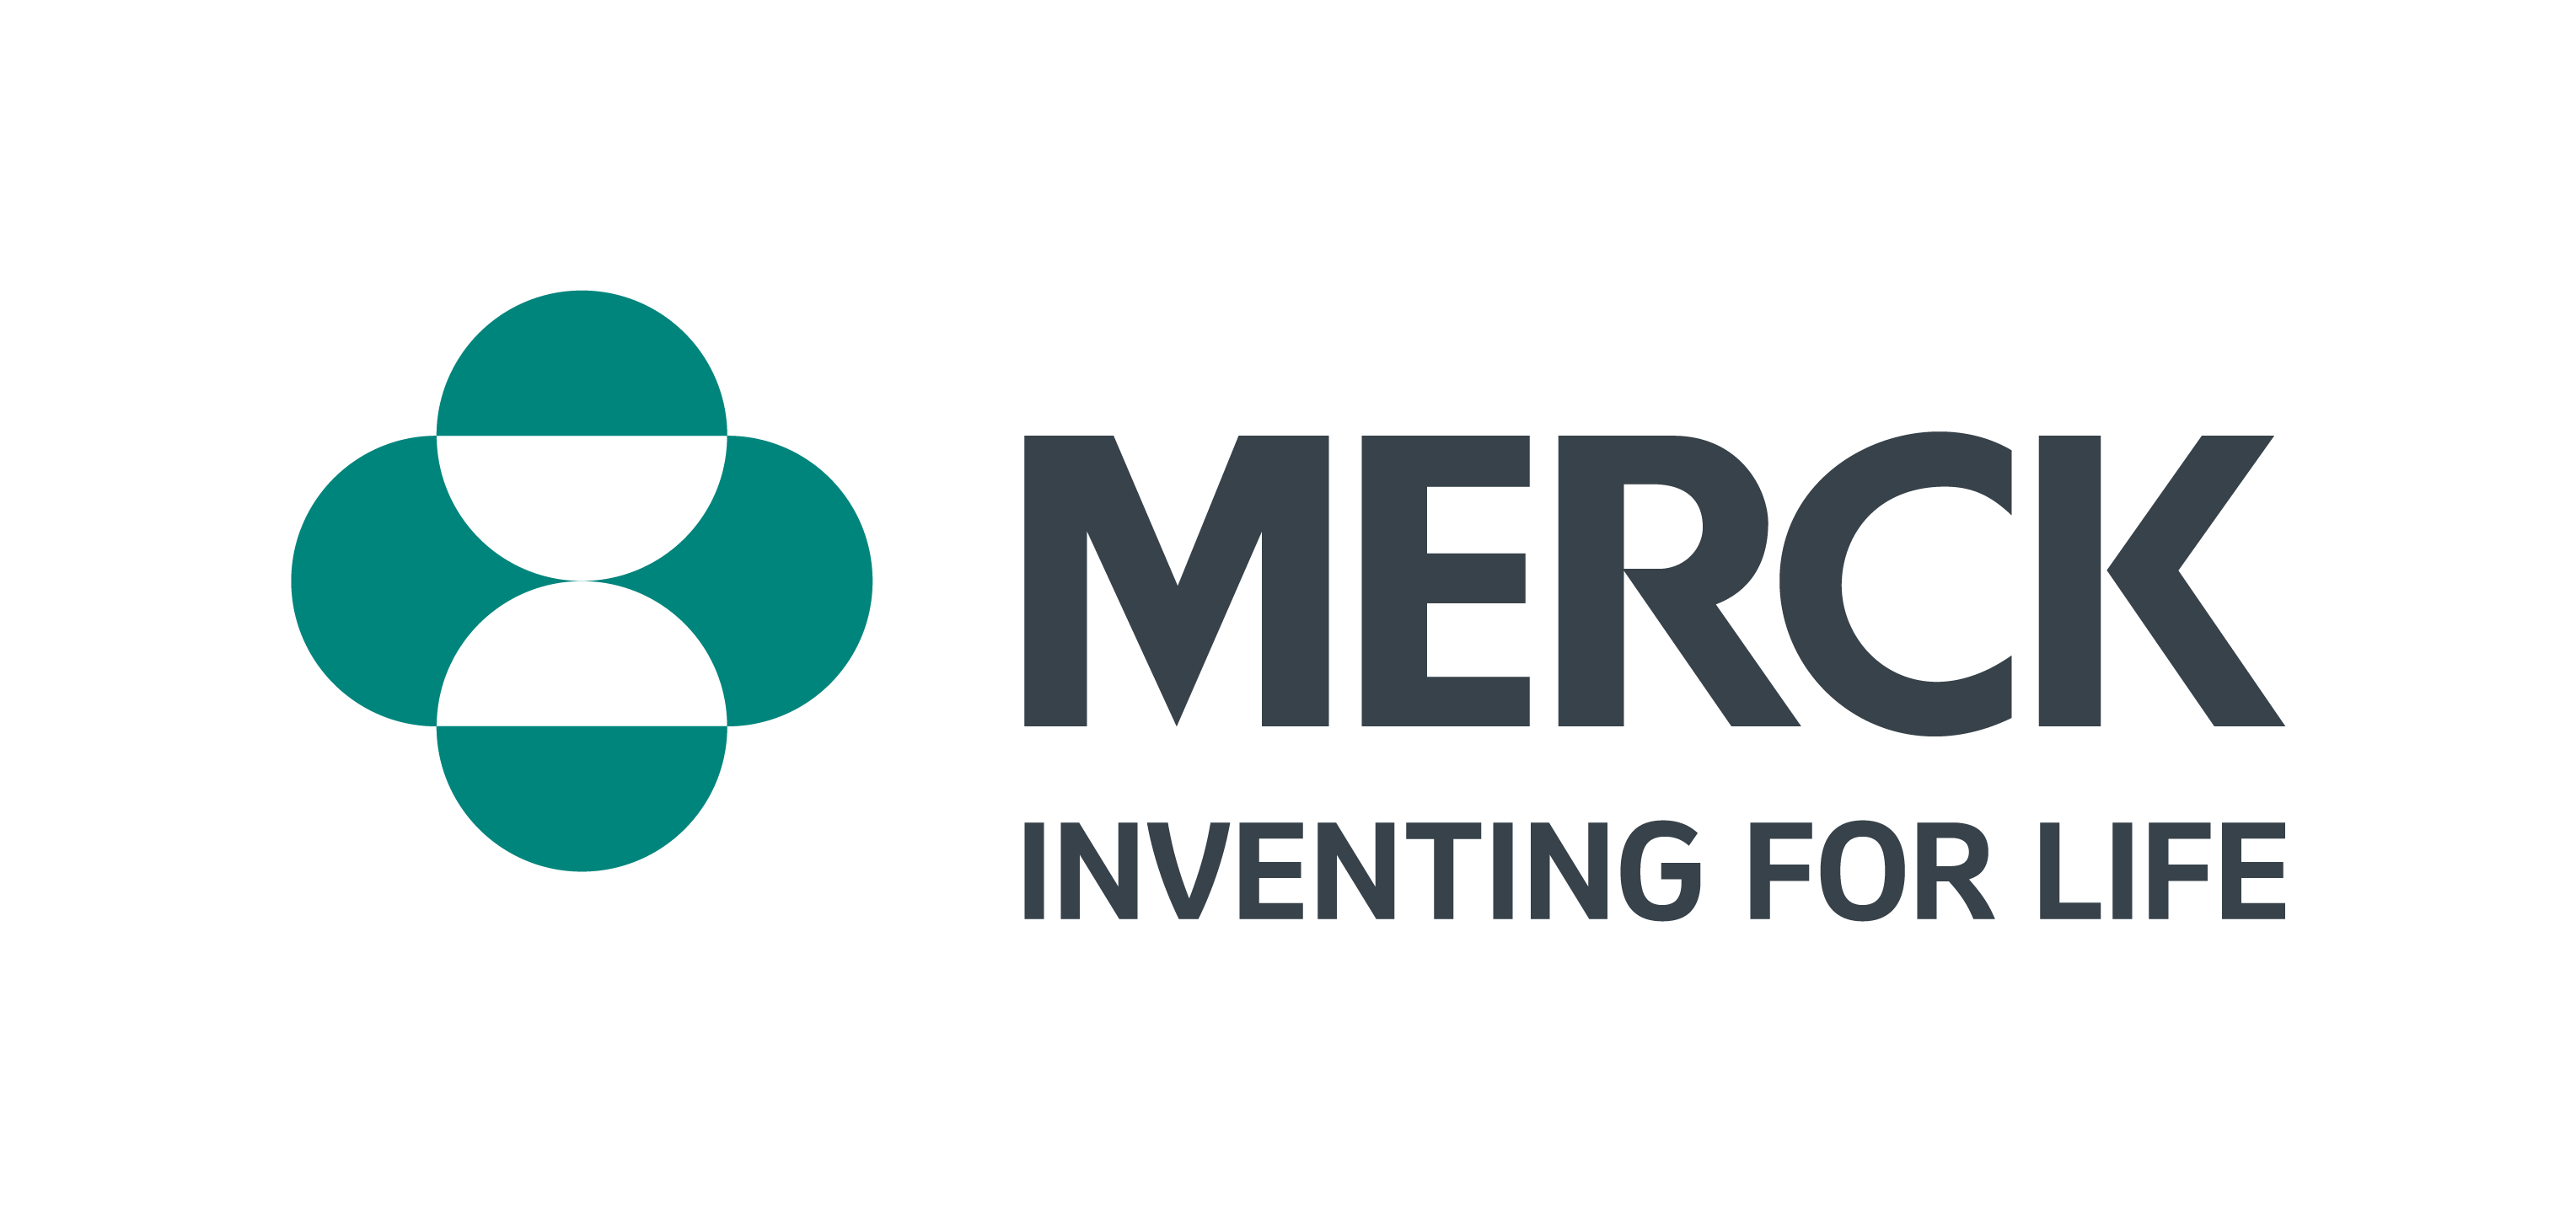 Merck Logo in teal and grey